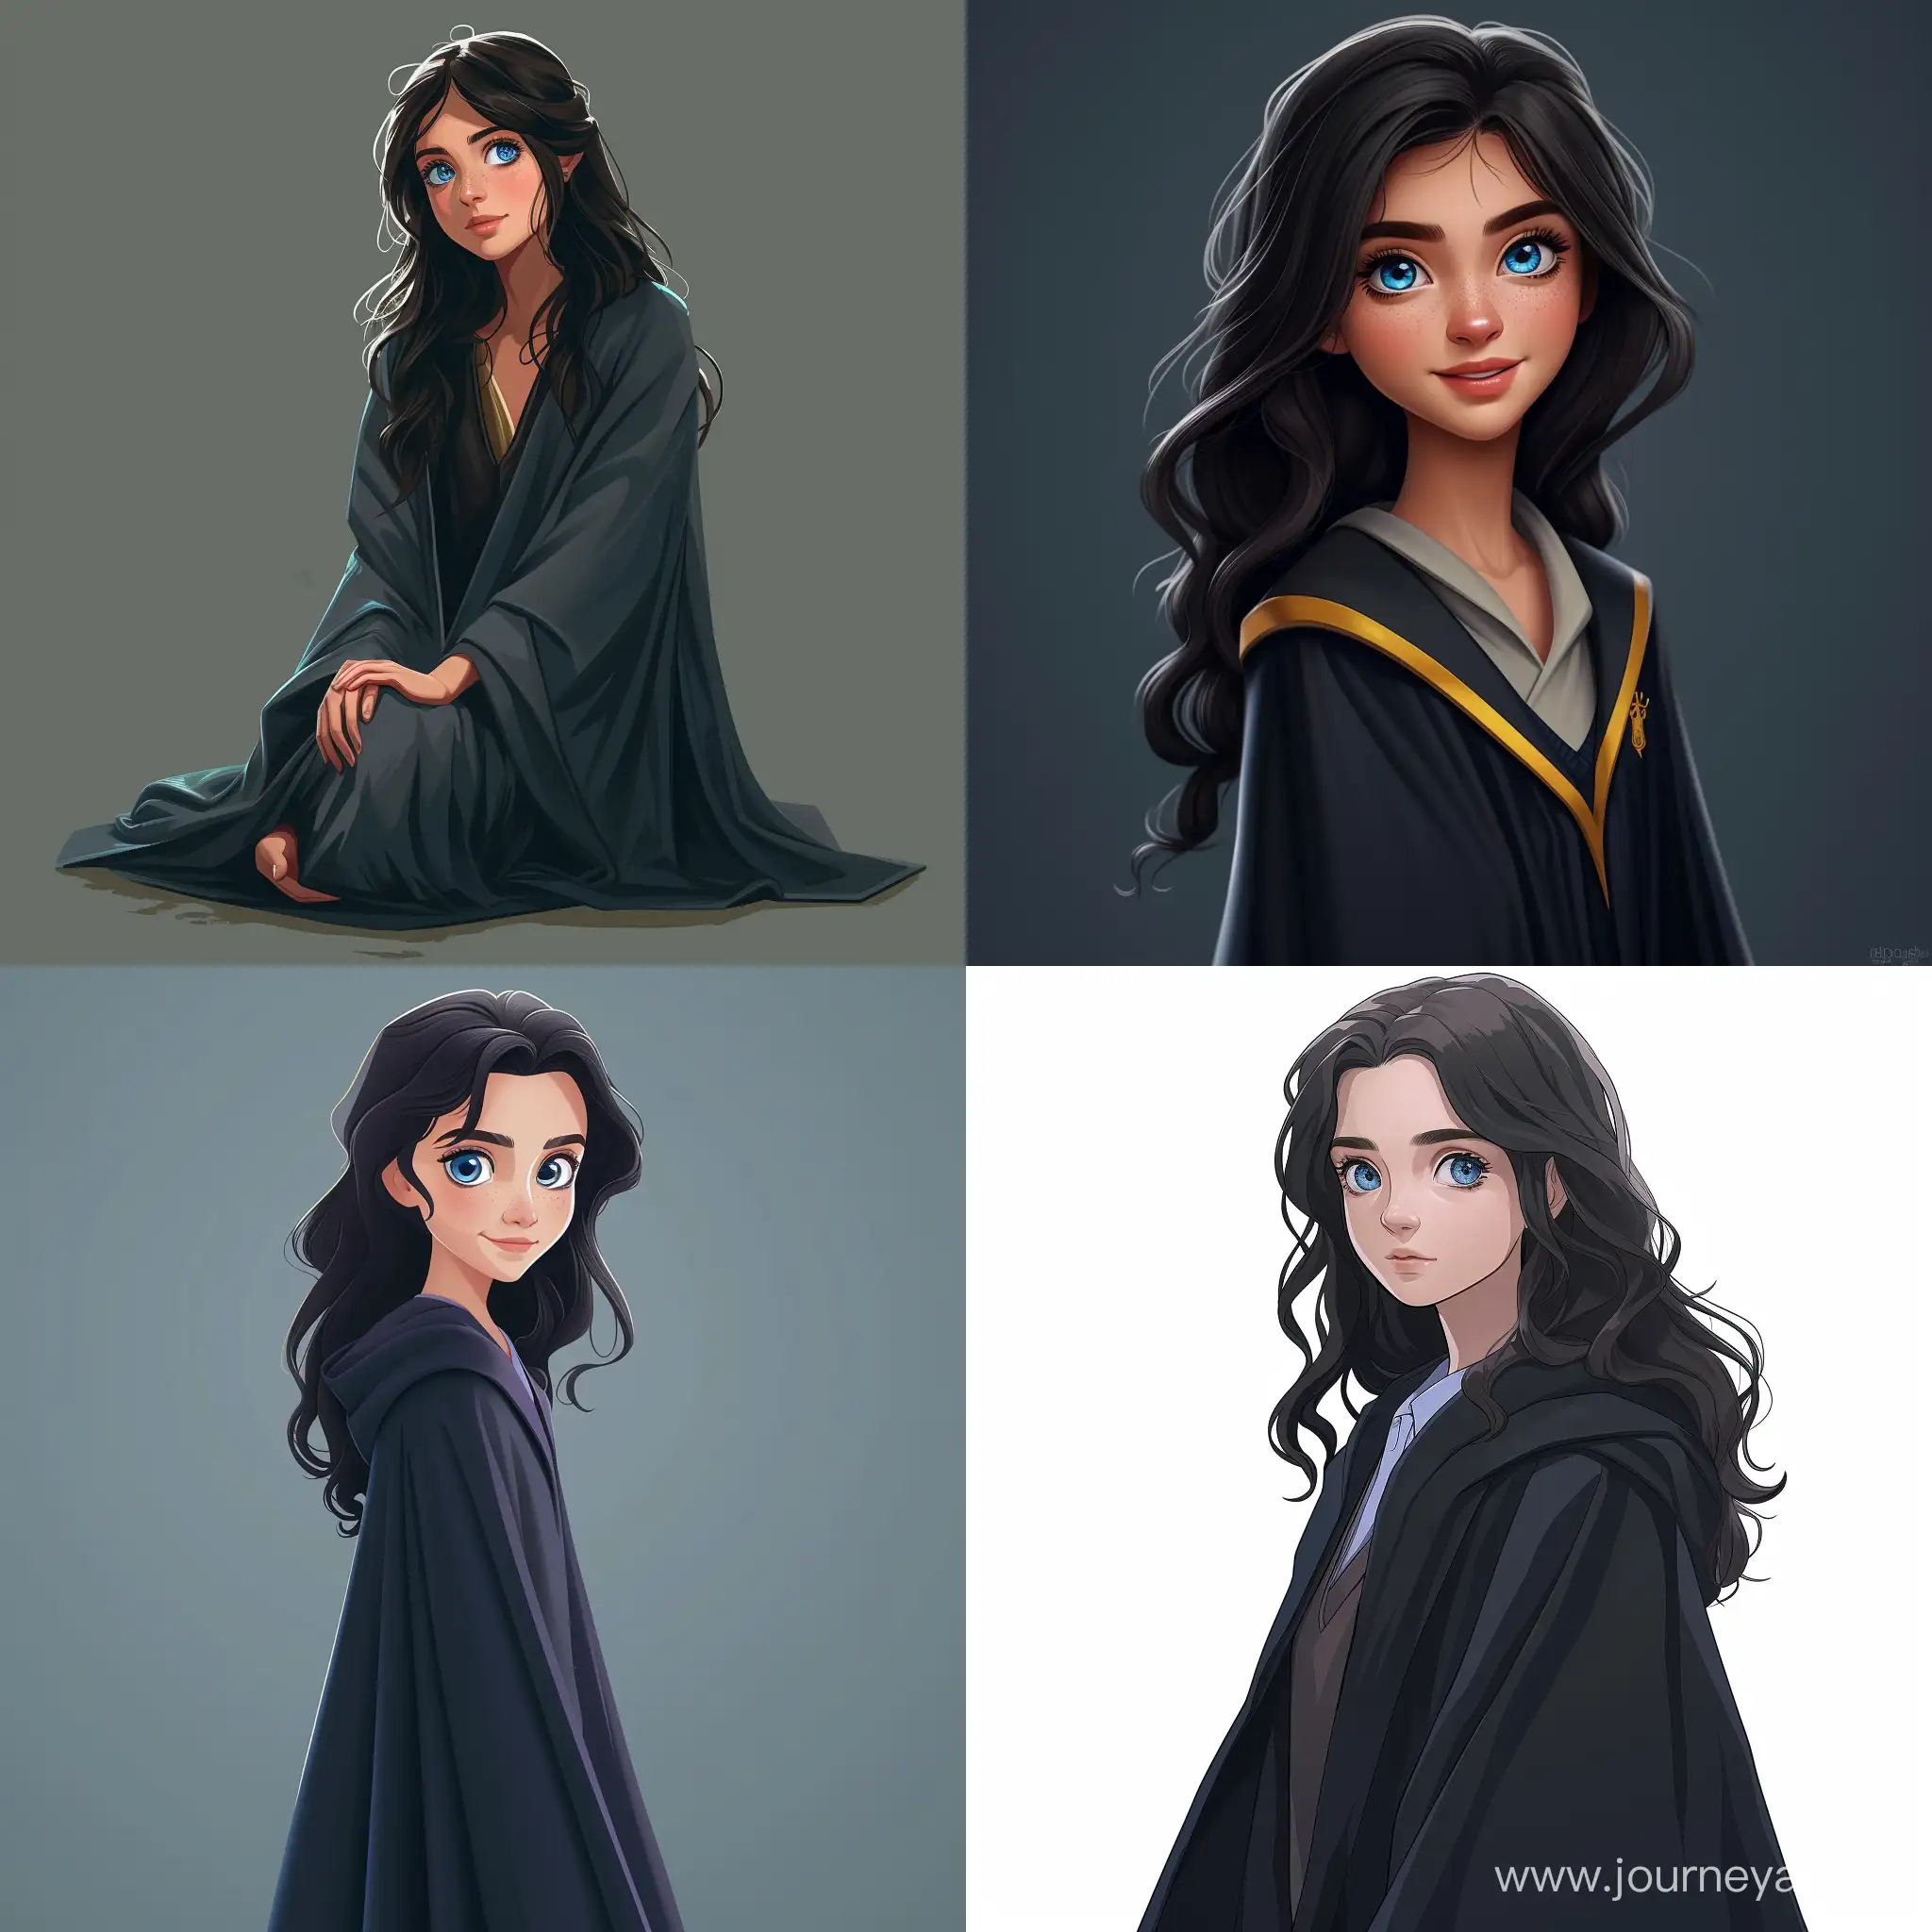 Beautiful girl, dark hair, blue eyes, white skin, teenager, 15 years old, Hogwarts student, Ravenclaw faculty, long robe, full length, high quality, high detail, cartoon art